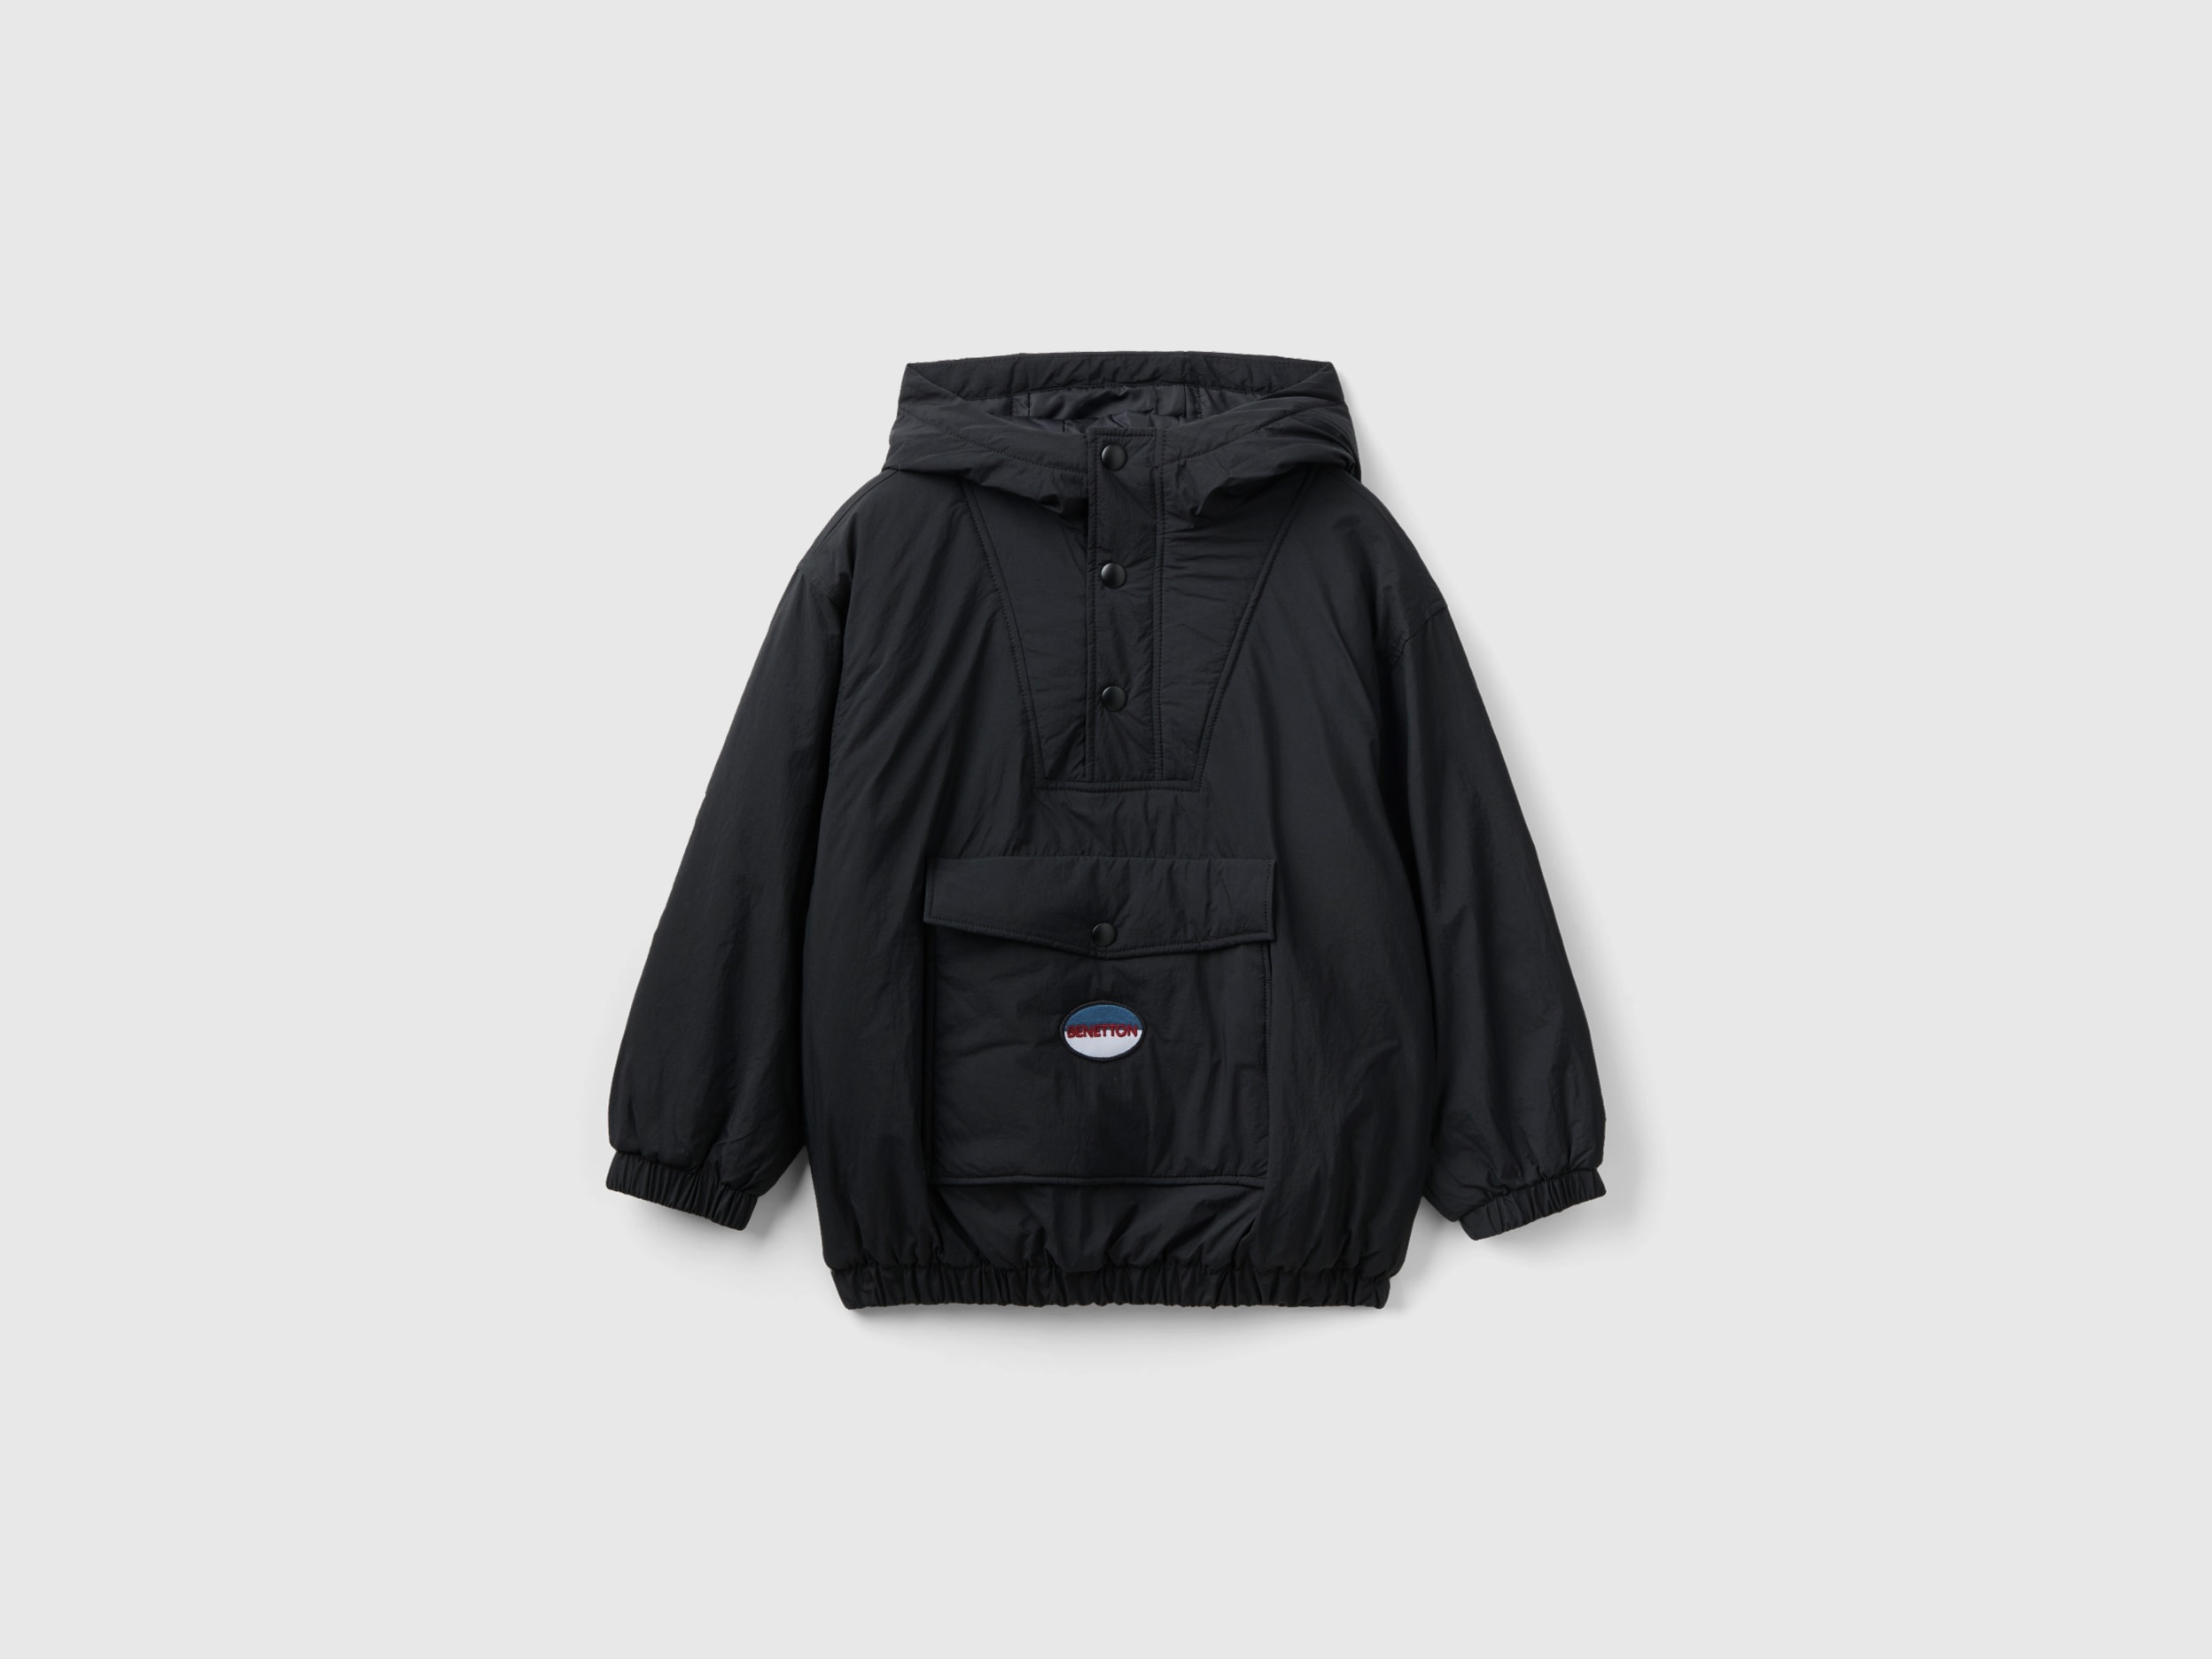 Benetton, Black Jacket With Pocket, size XL, Black, Kids